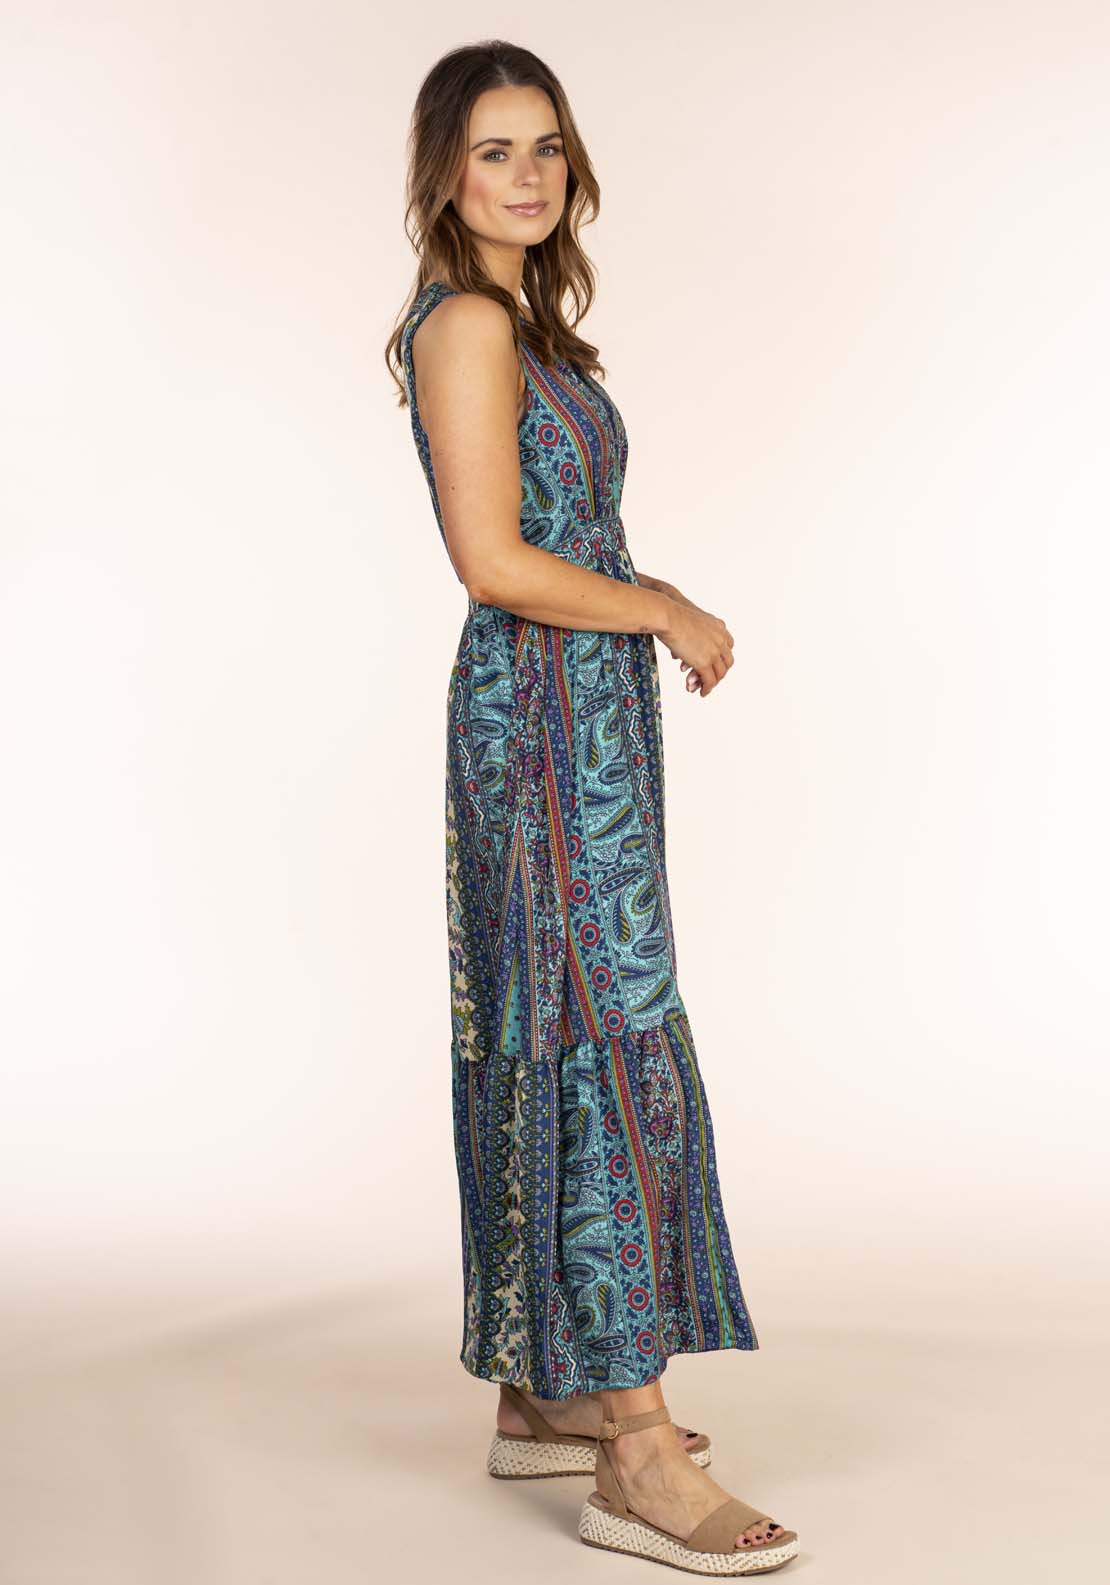 Naoise Sleeveless Tier Dress - Blue 3 Shaws Department Stores